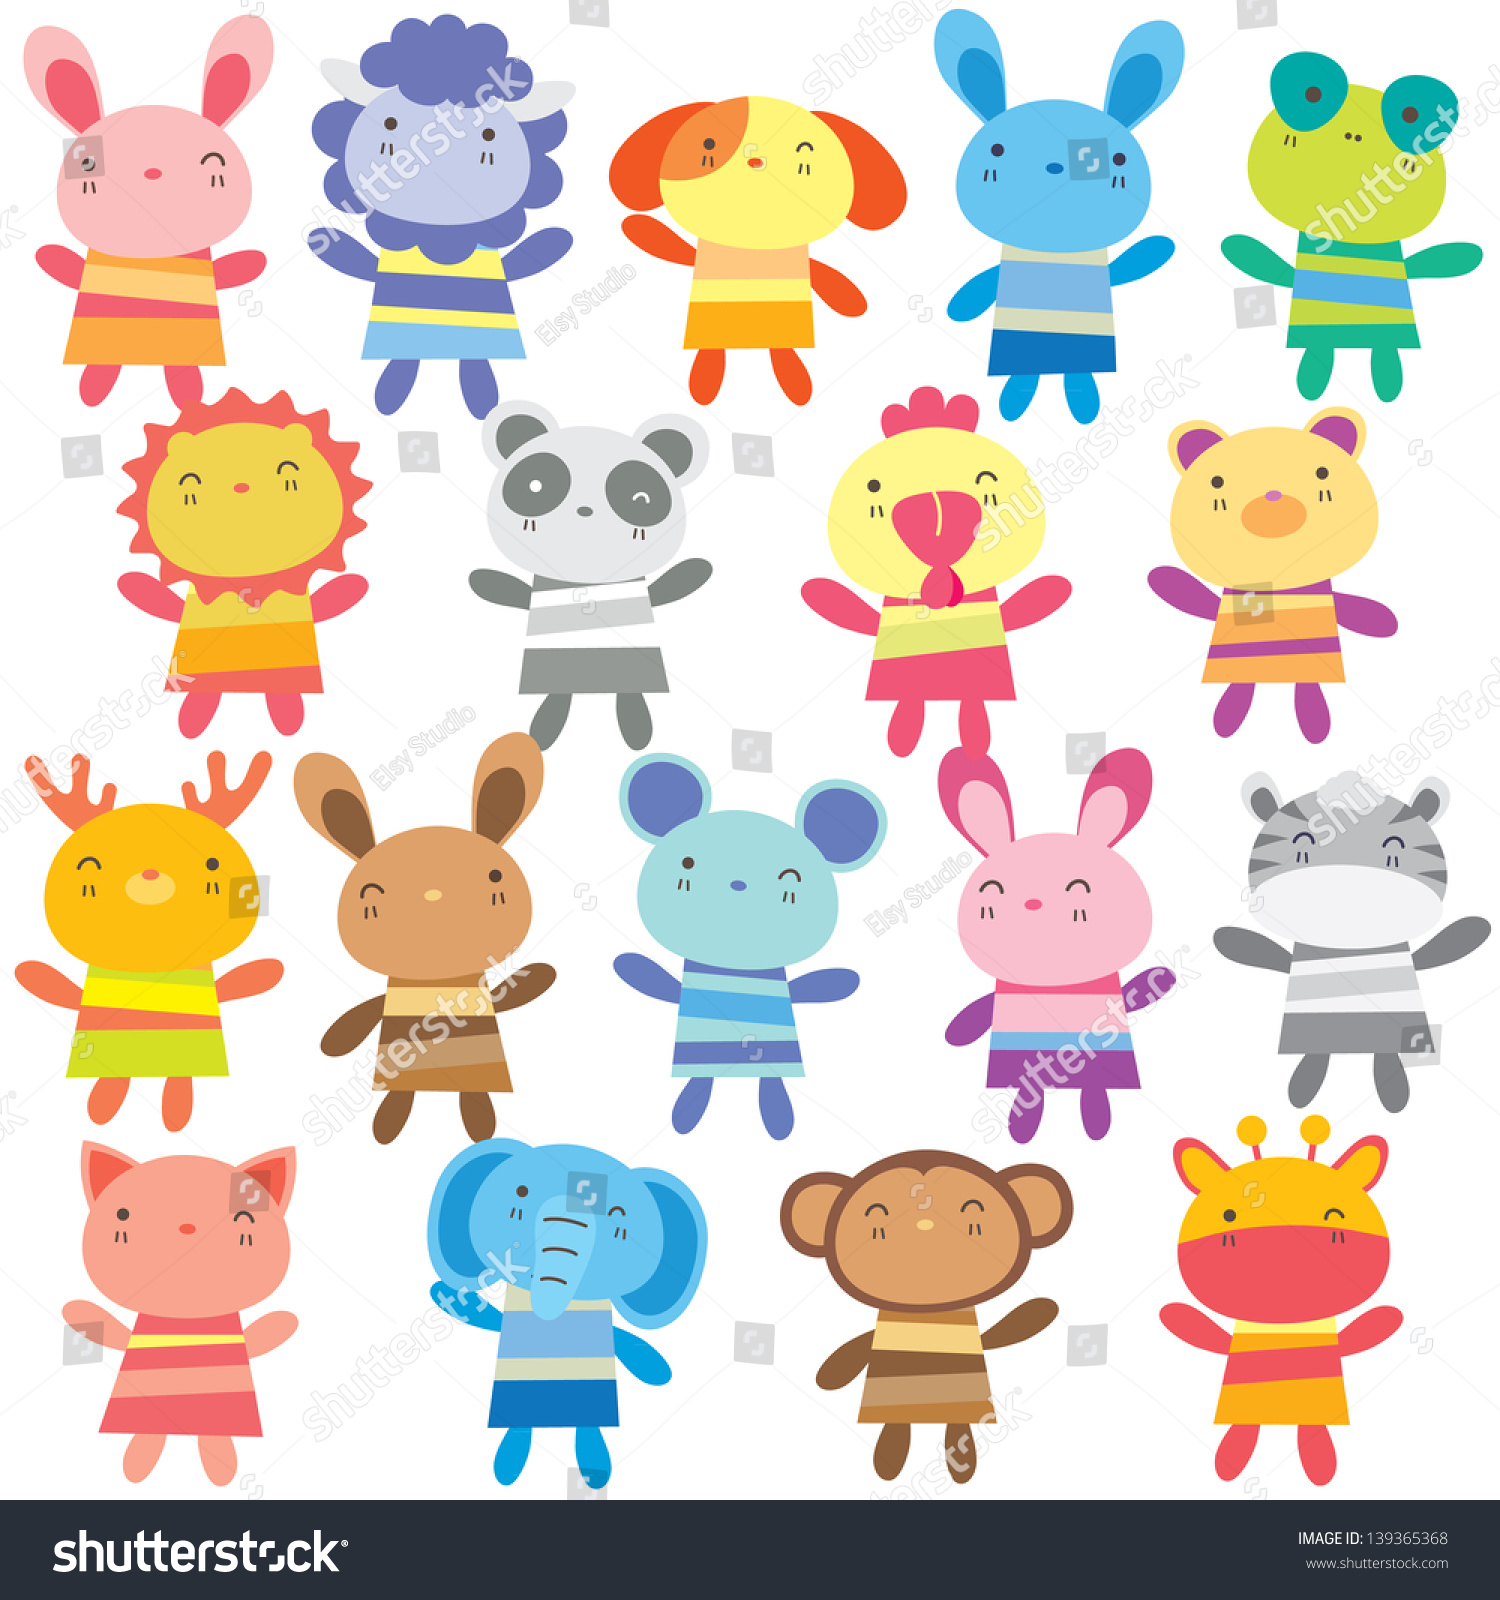 Mix Animal Dolls Clip Art Stock Vector 139365368 - Shutterstock